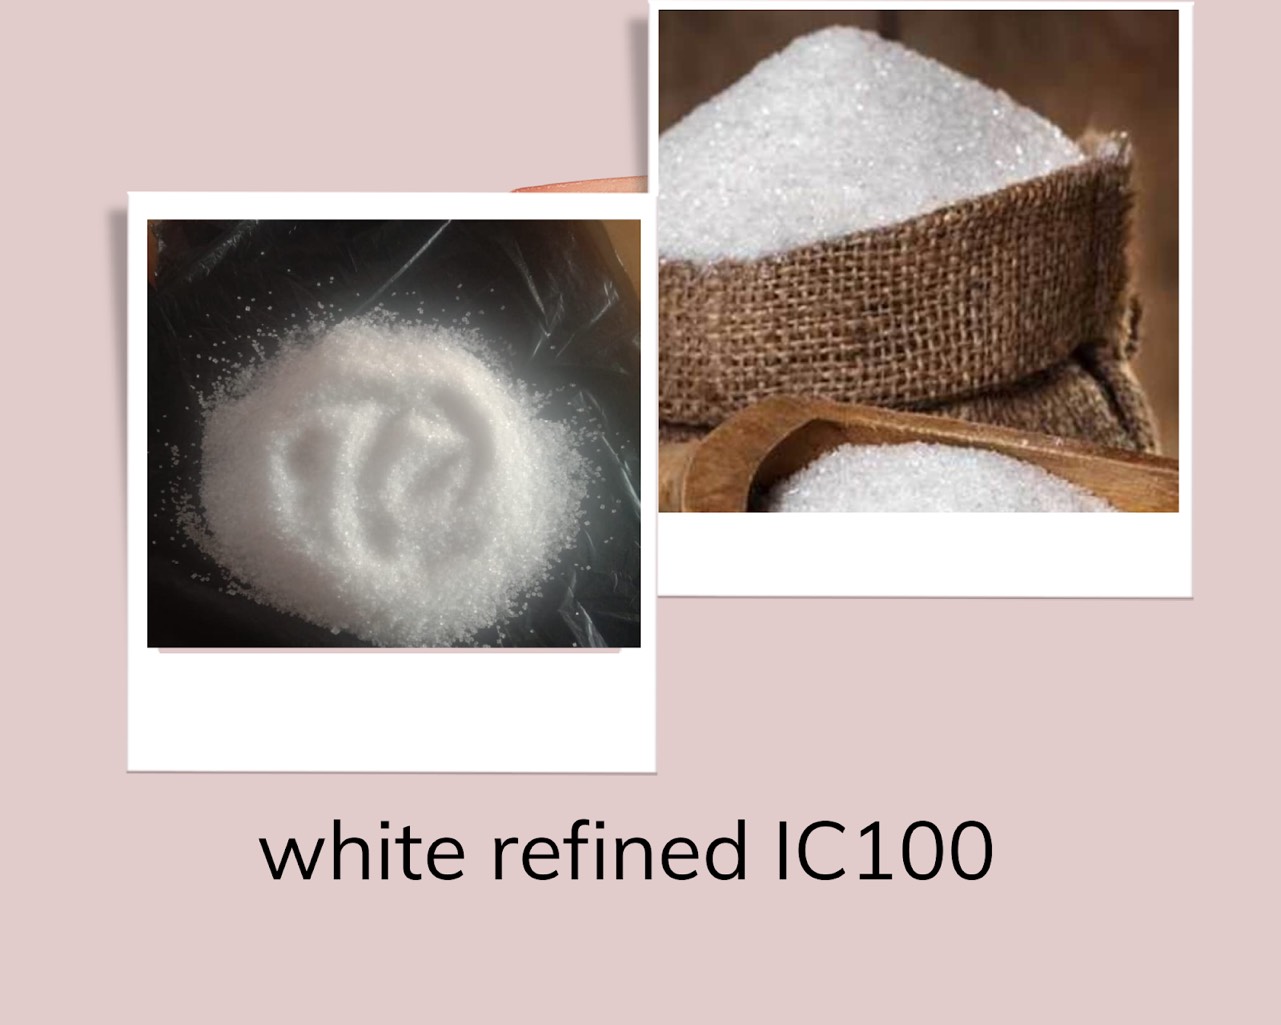 White refined sugar IC100